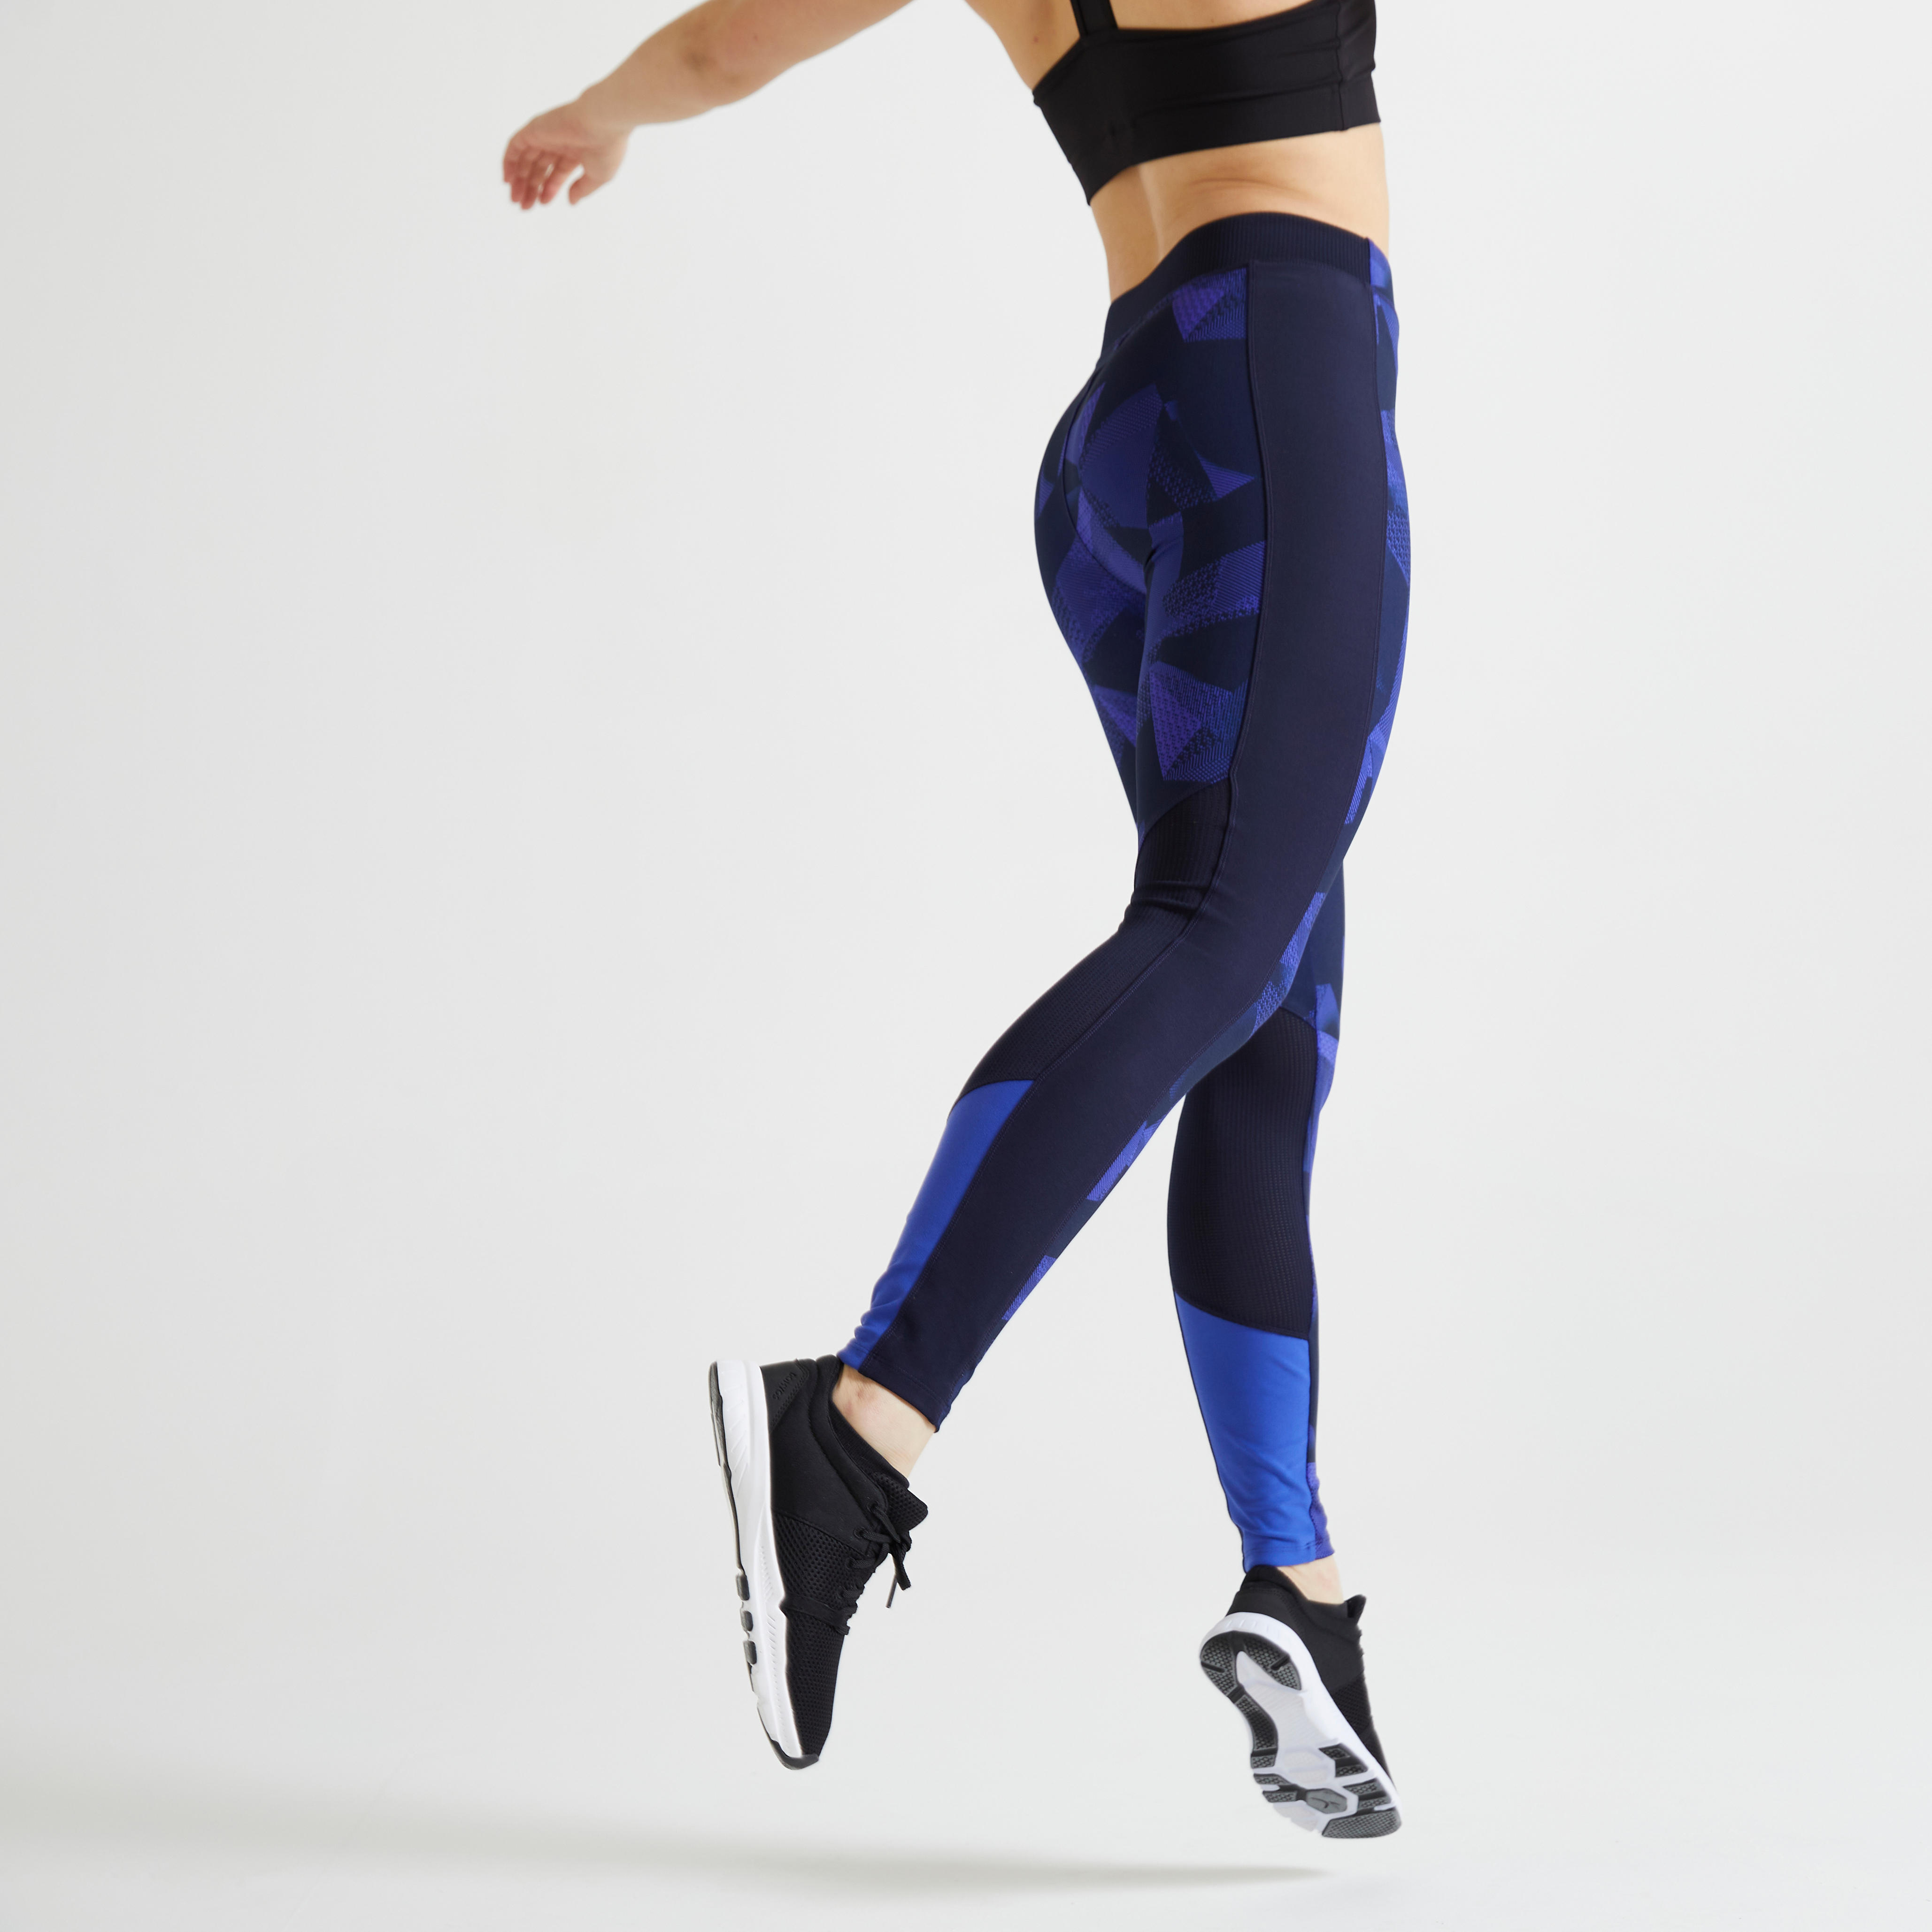 Buy Yoga Pants For Women Online | Decathlon